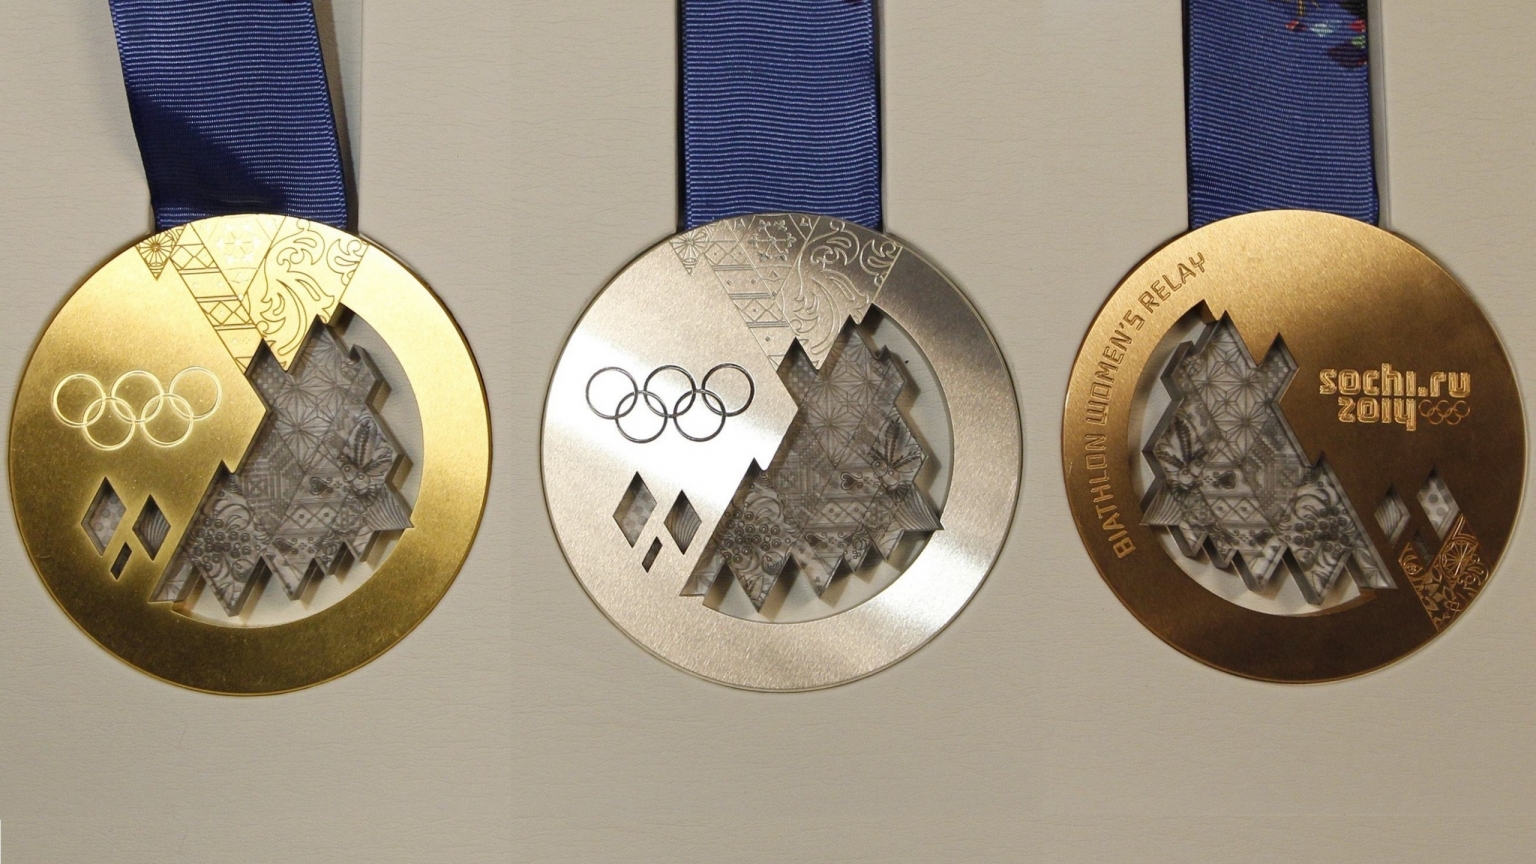 Sochi 2014 Medals for 1536 x 864 HDTV resolution